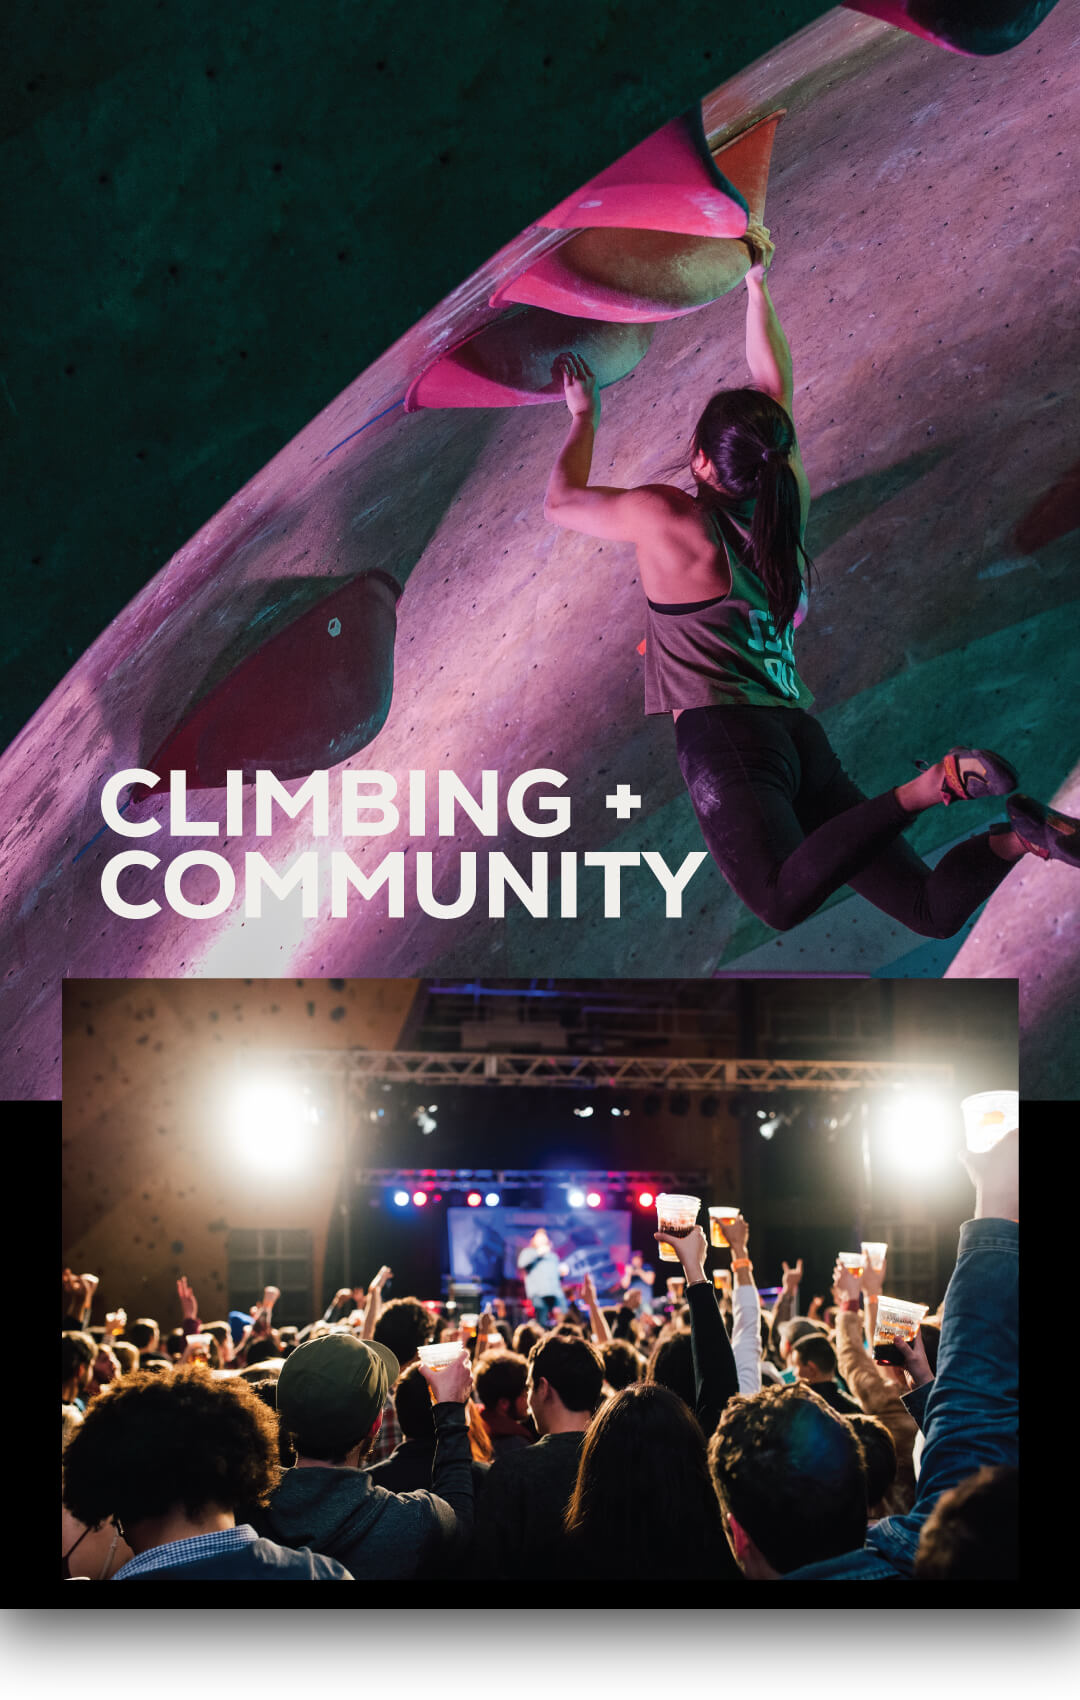 Climbing + Community - Woman rock climbing & indoor rock climbing event